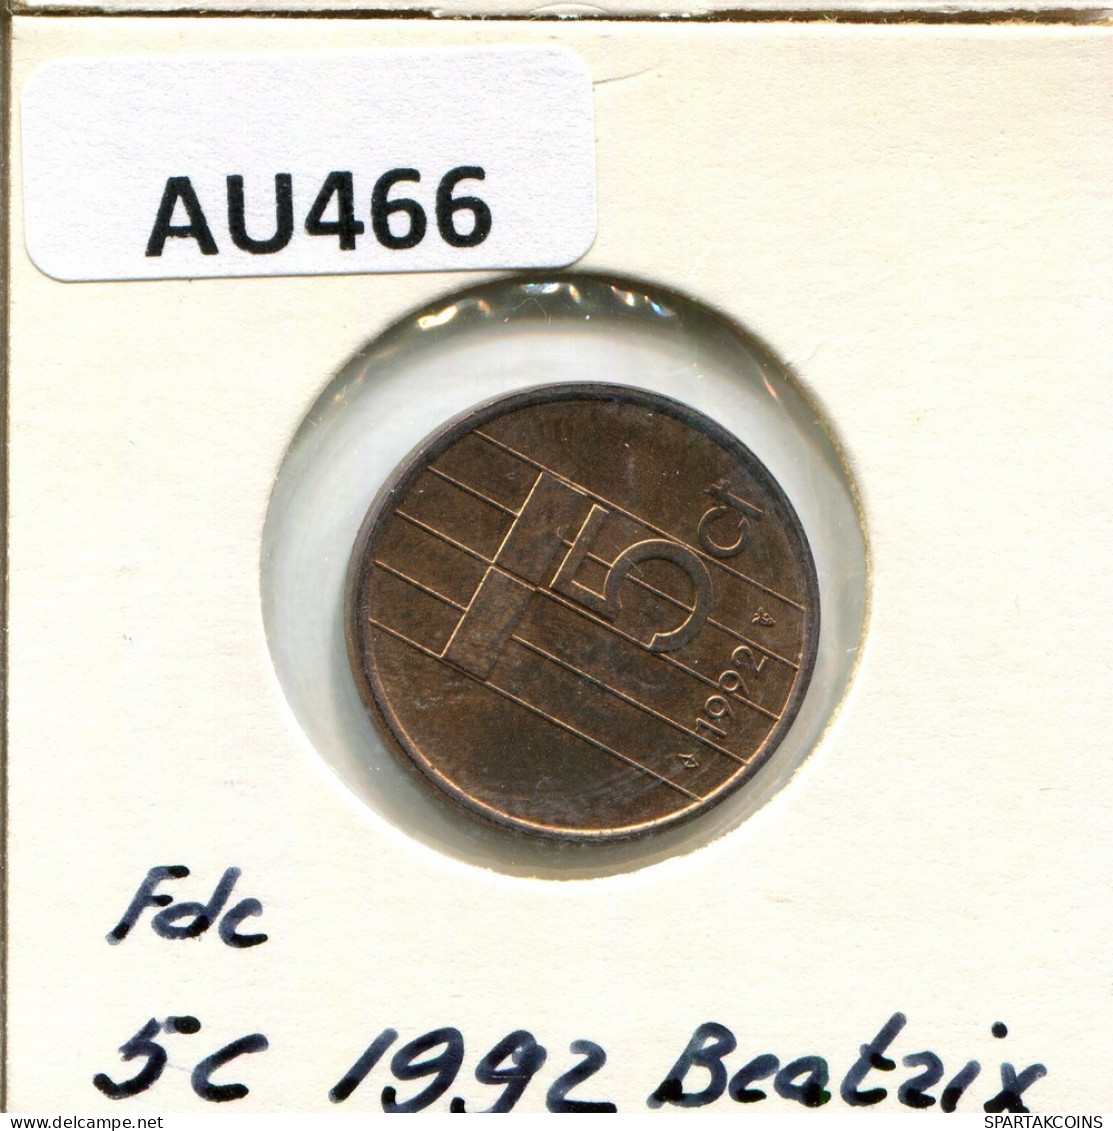 5 CENTS 1992 NETHERLANDS Coin #AU466.U.A - 1980-2001 : Beatrix